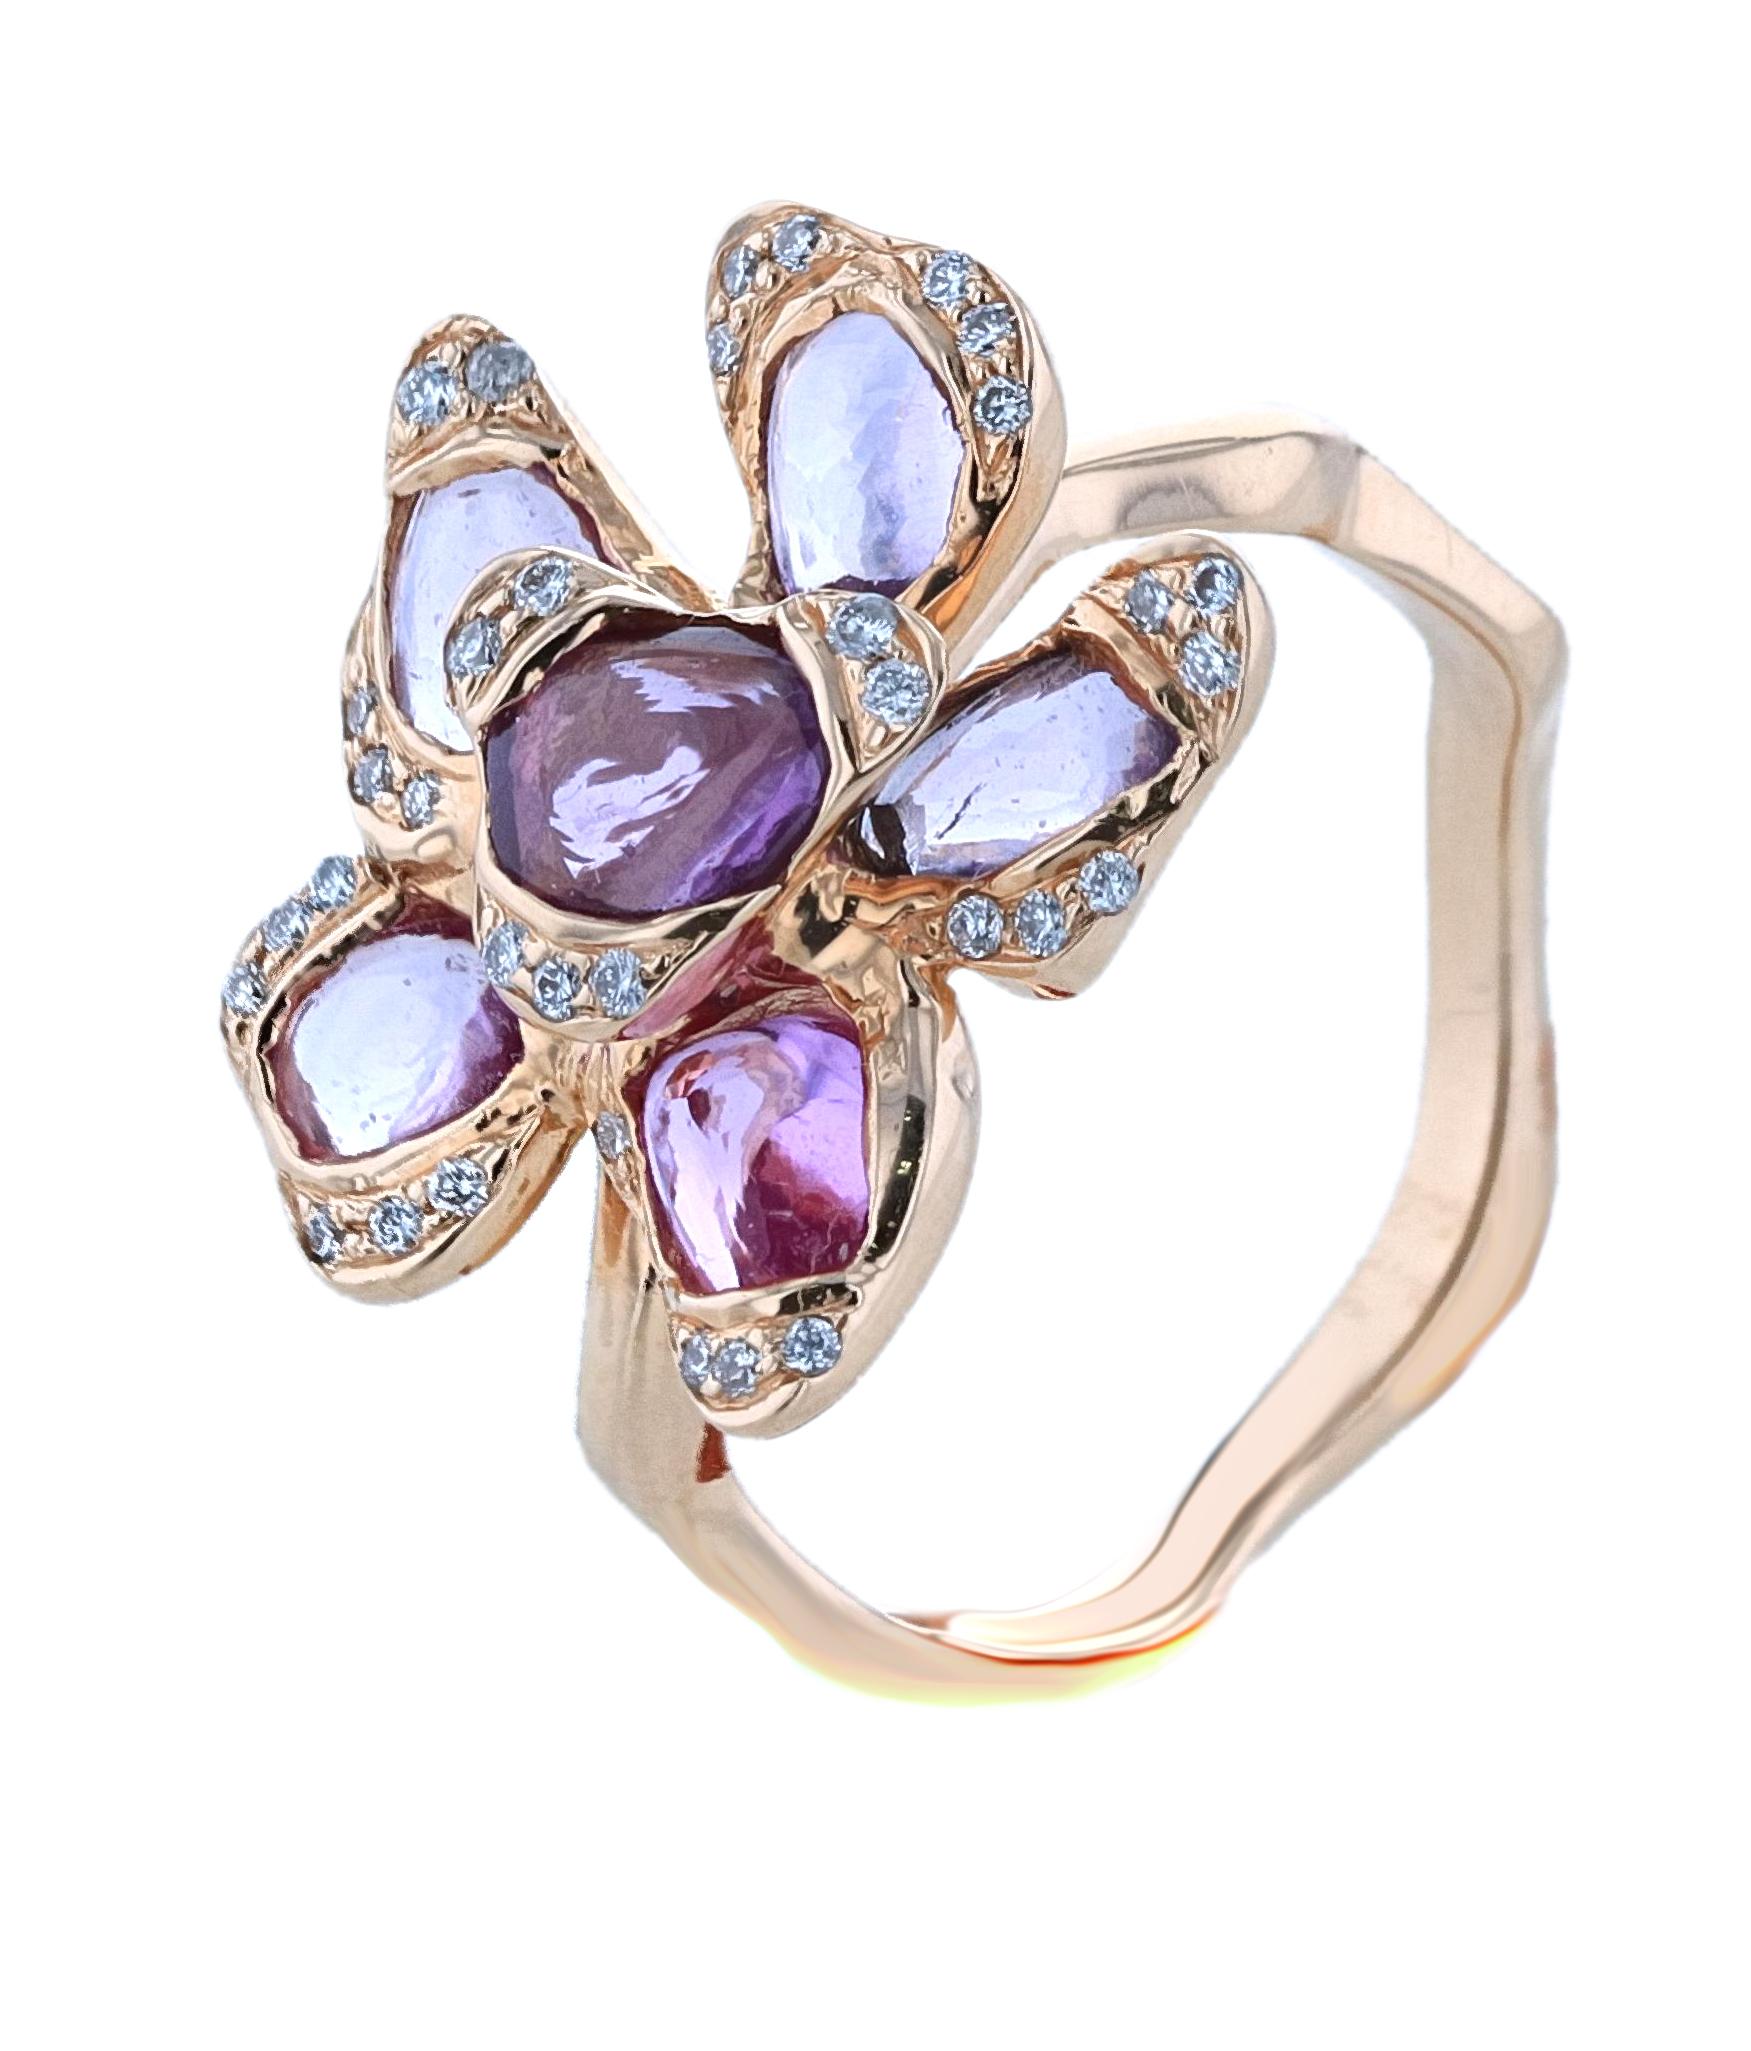 18 Karat Rose Gold Flower Ring with Pink Sapphires 3